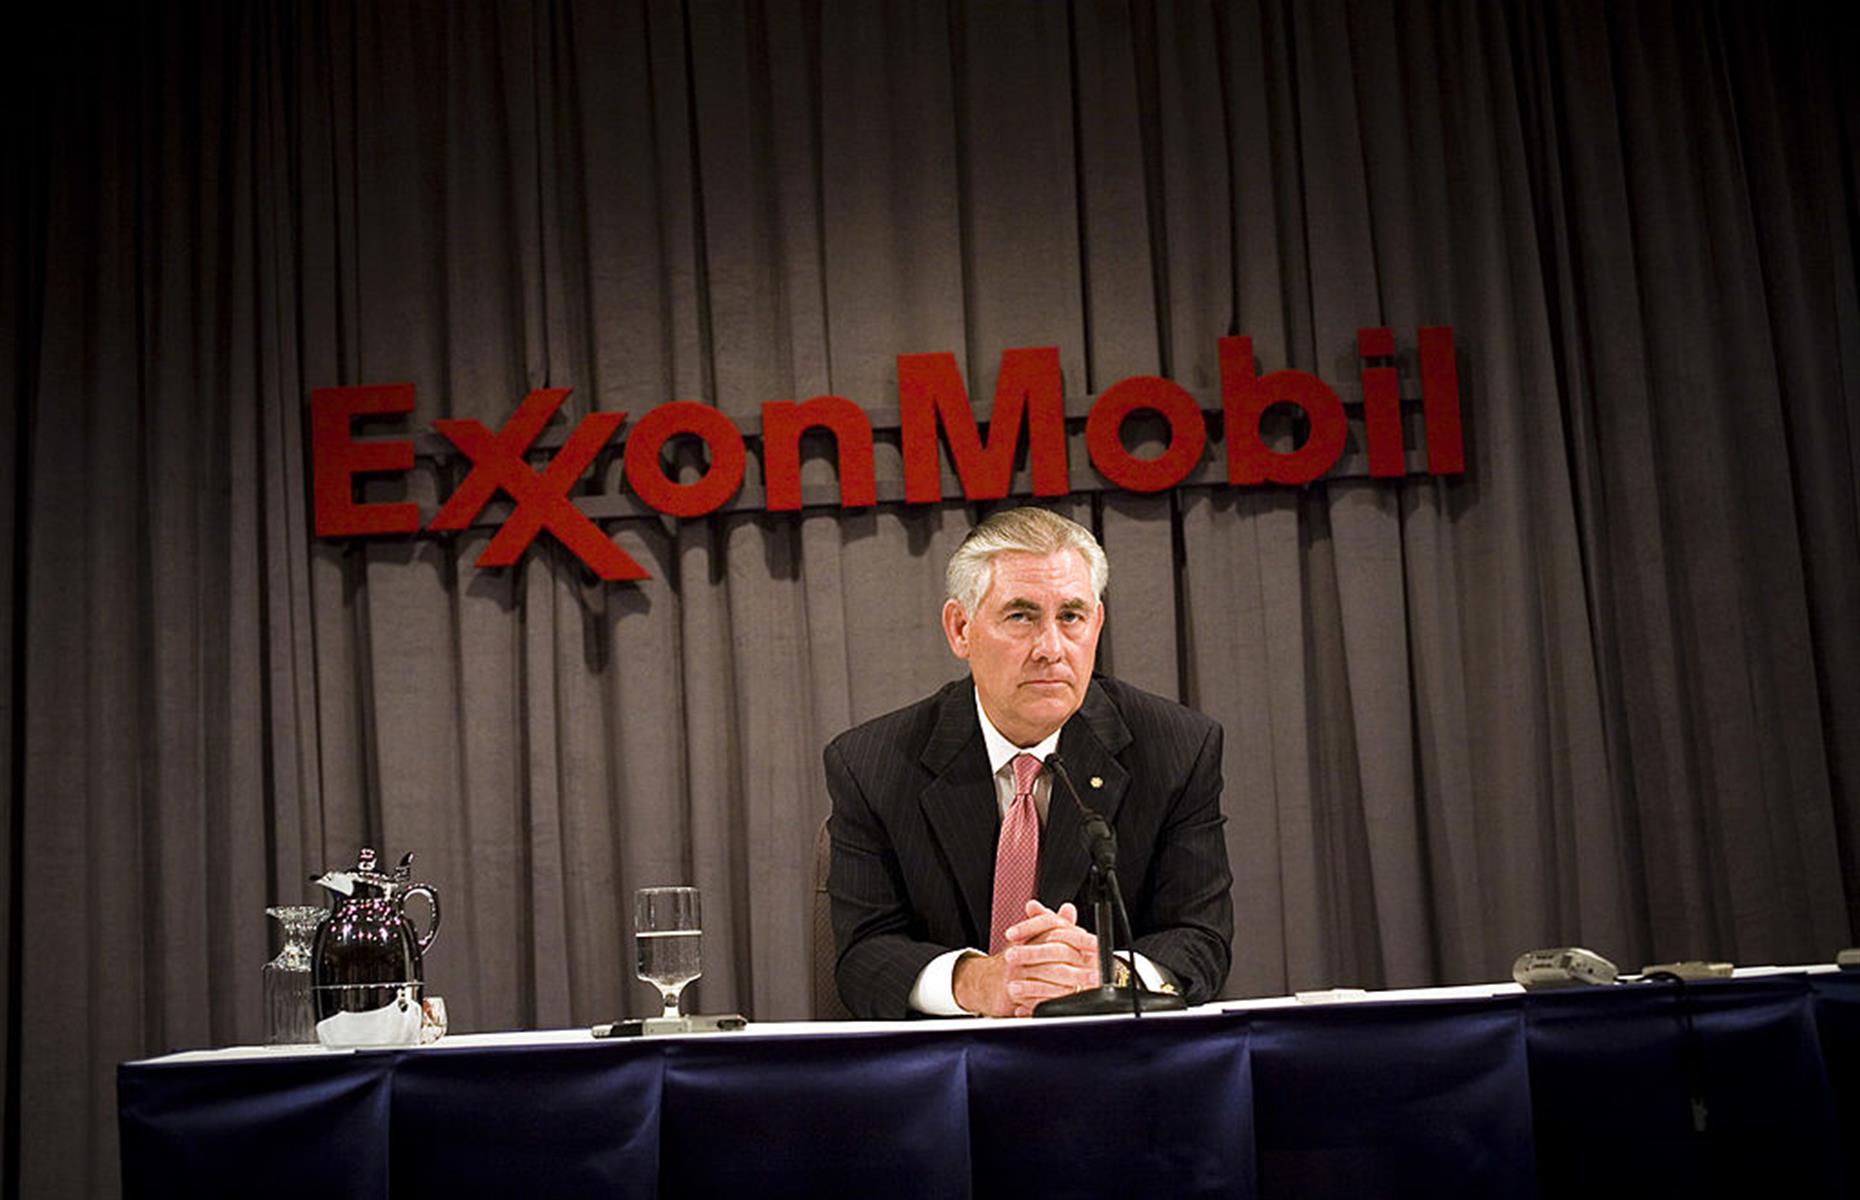 Rex Tillerson, Exxon Mobil